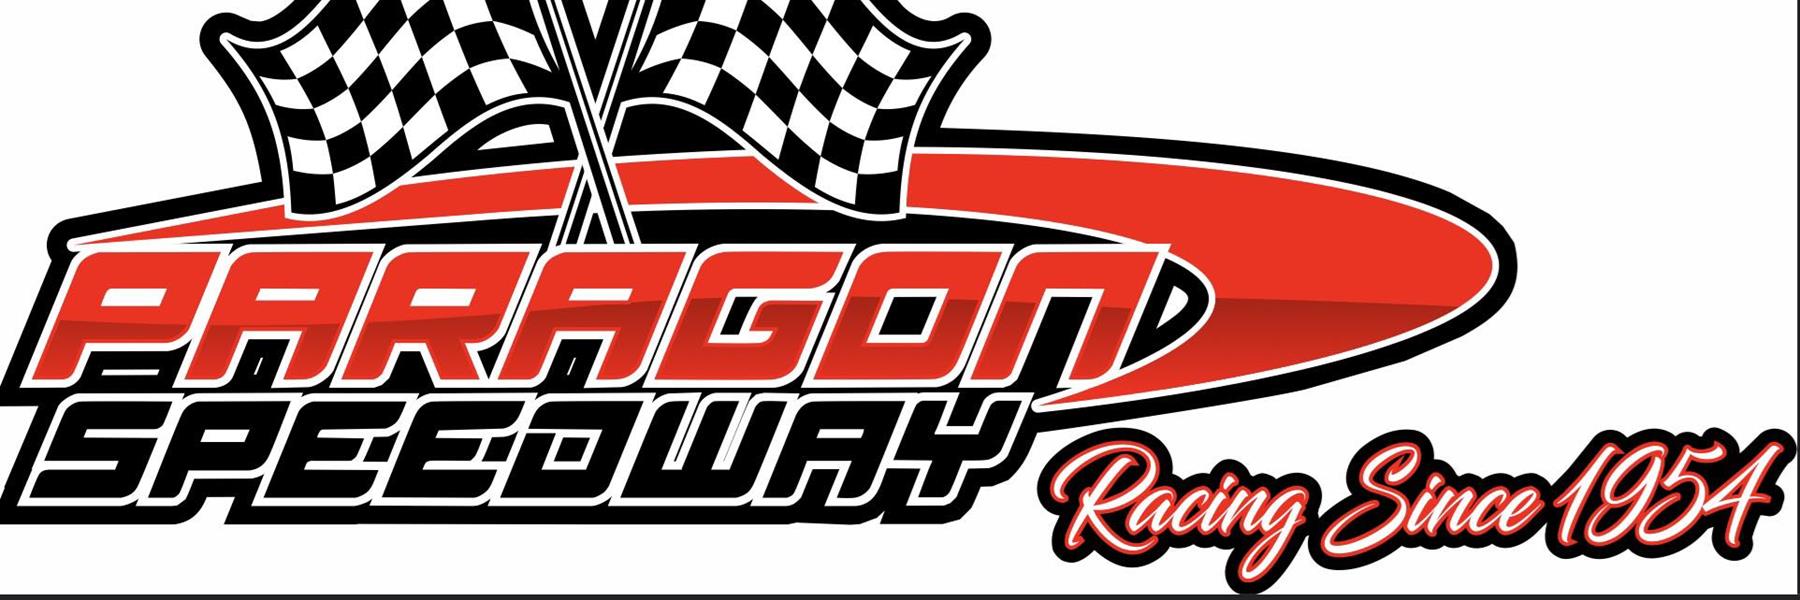 9/16/2023 - Paragon Speedway